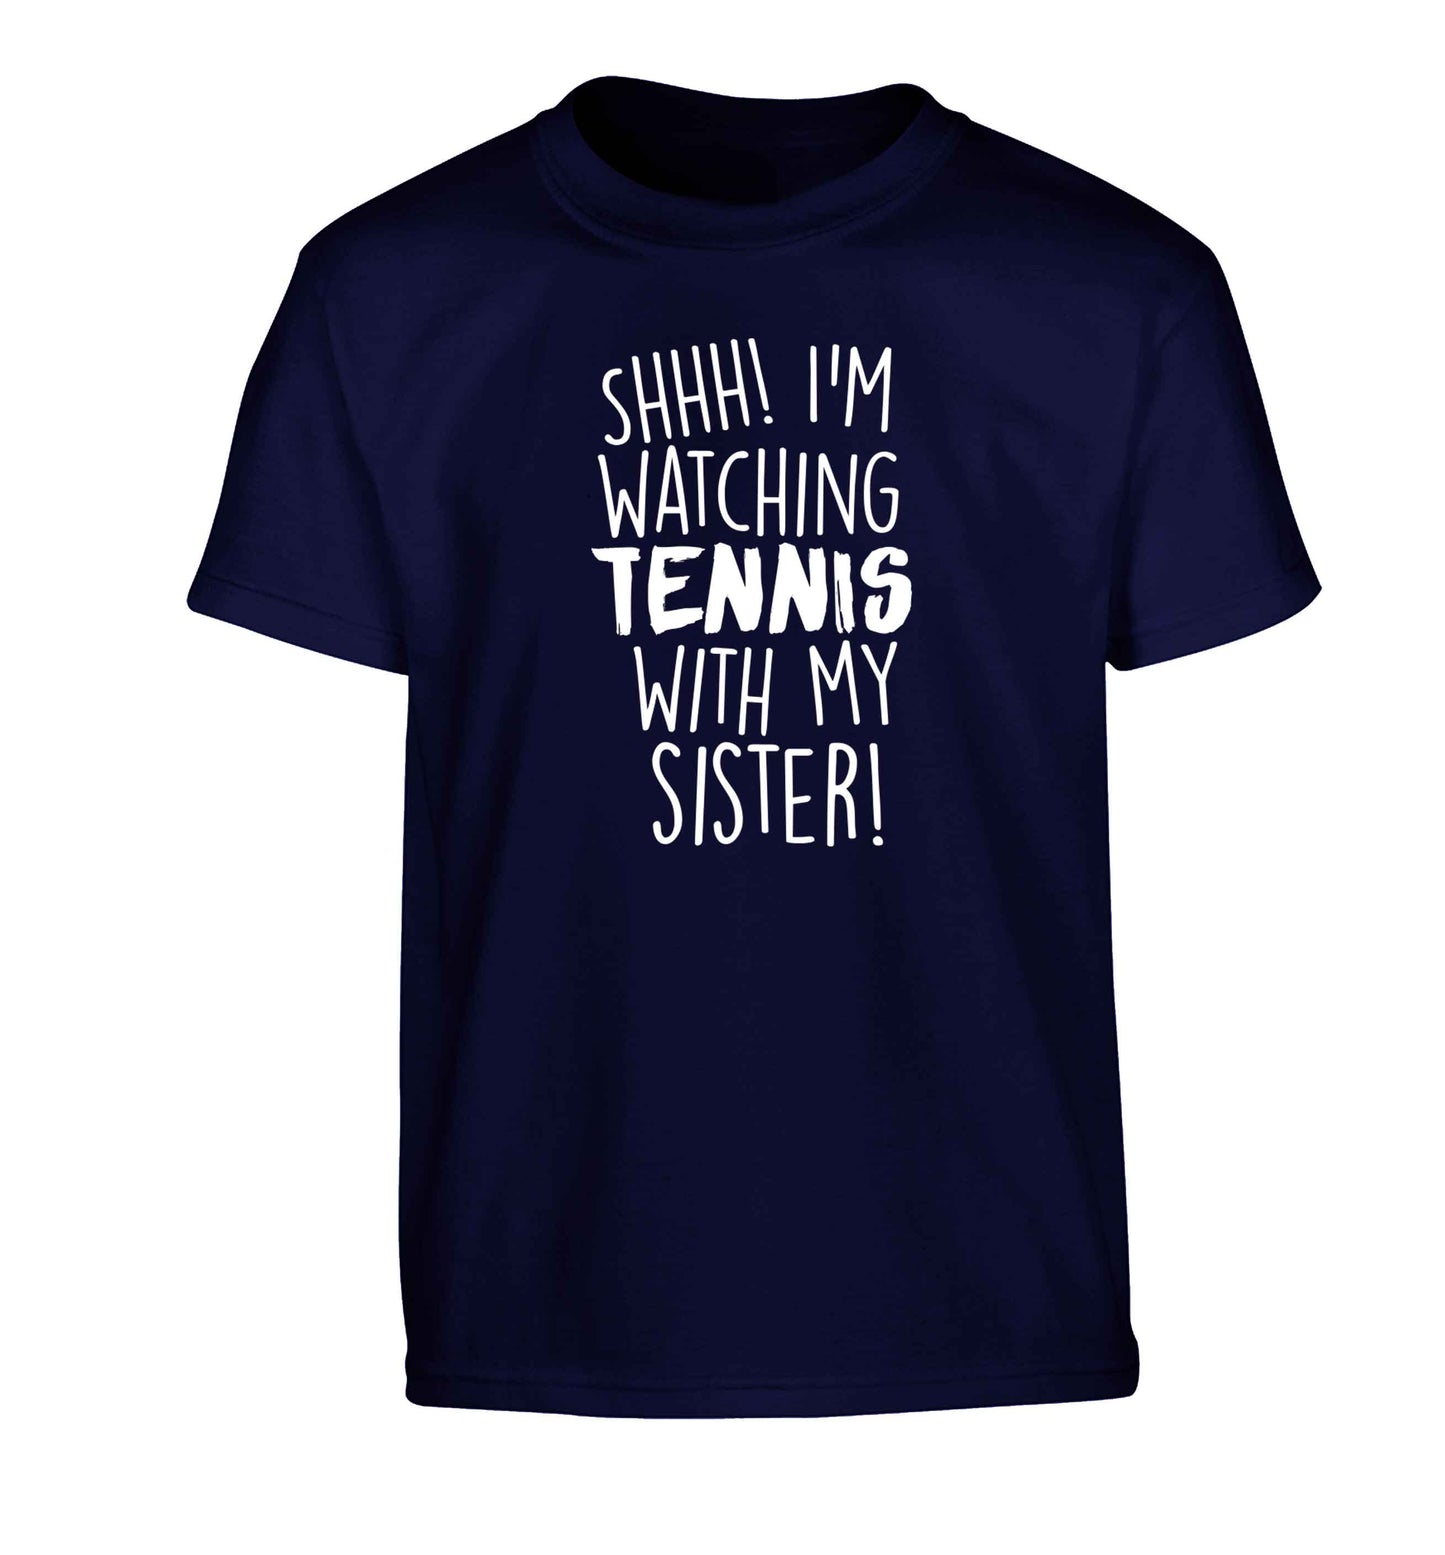 Shh! I'm watching tennis with my sister! Children's navy Tshirt 12-13 Years